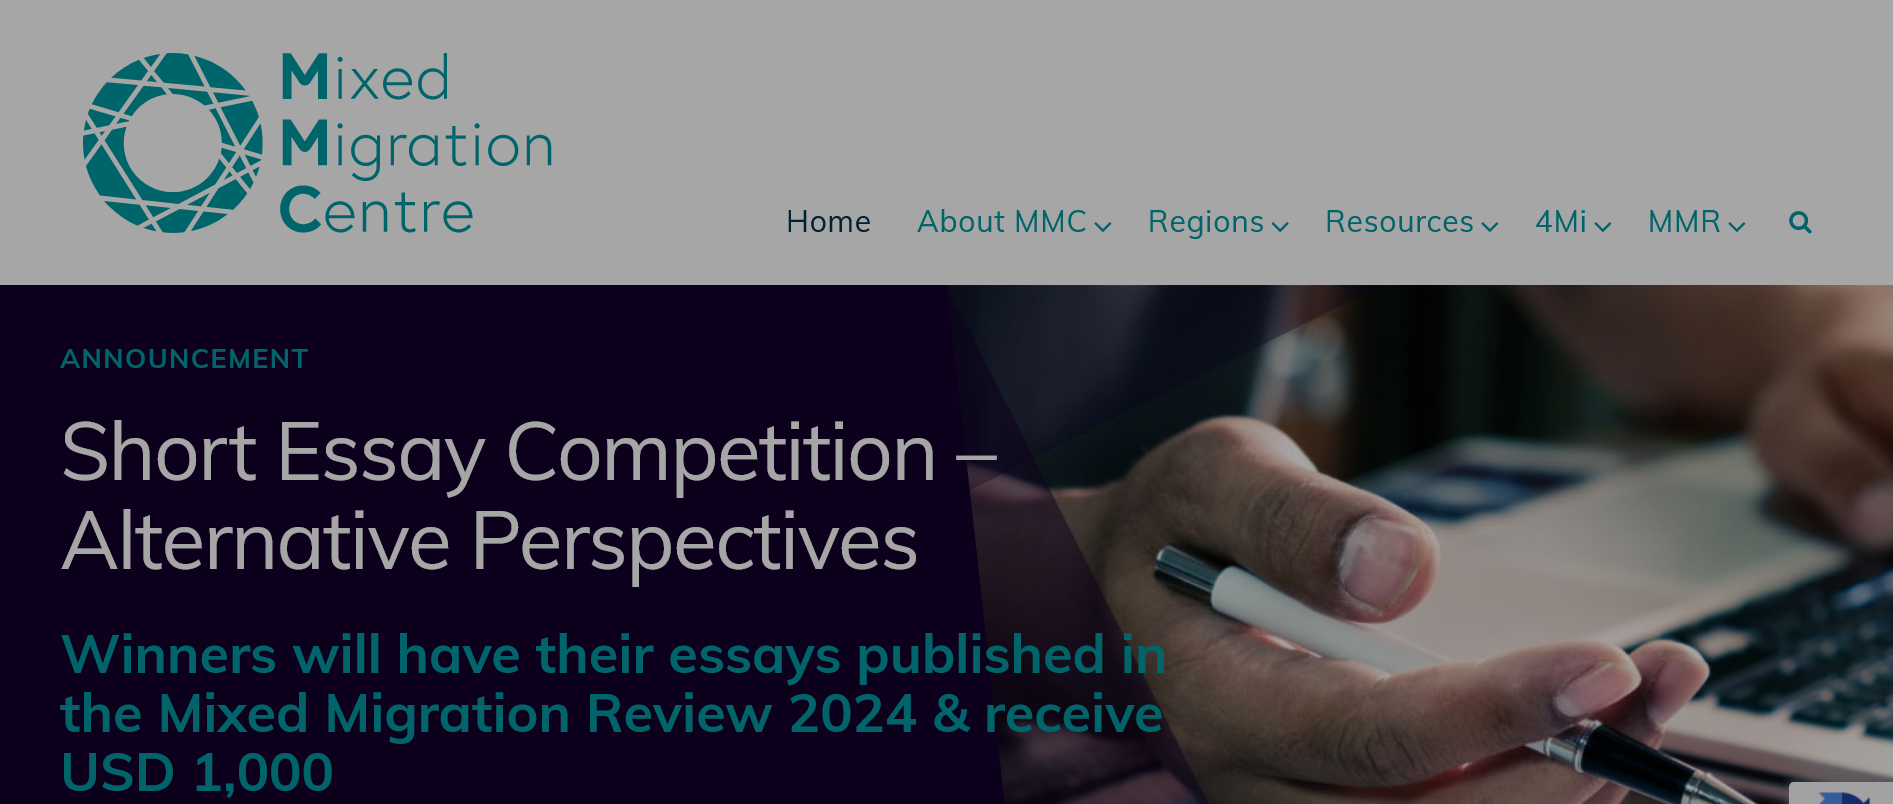 Mixed Migration Centre (MMC) Short Essay Competition 2024